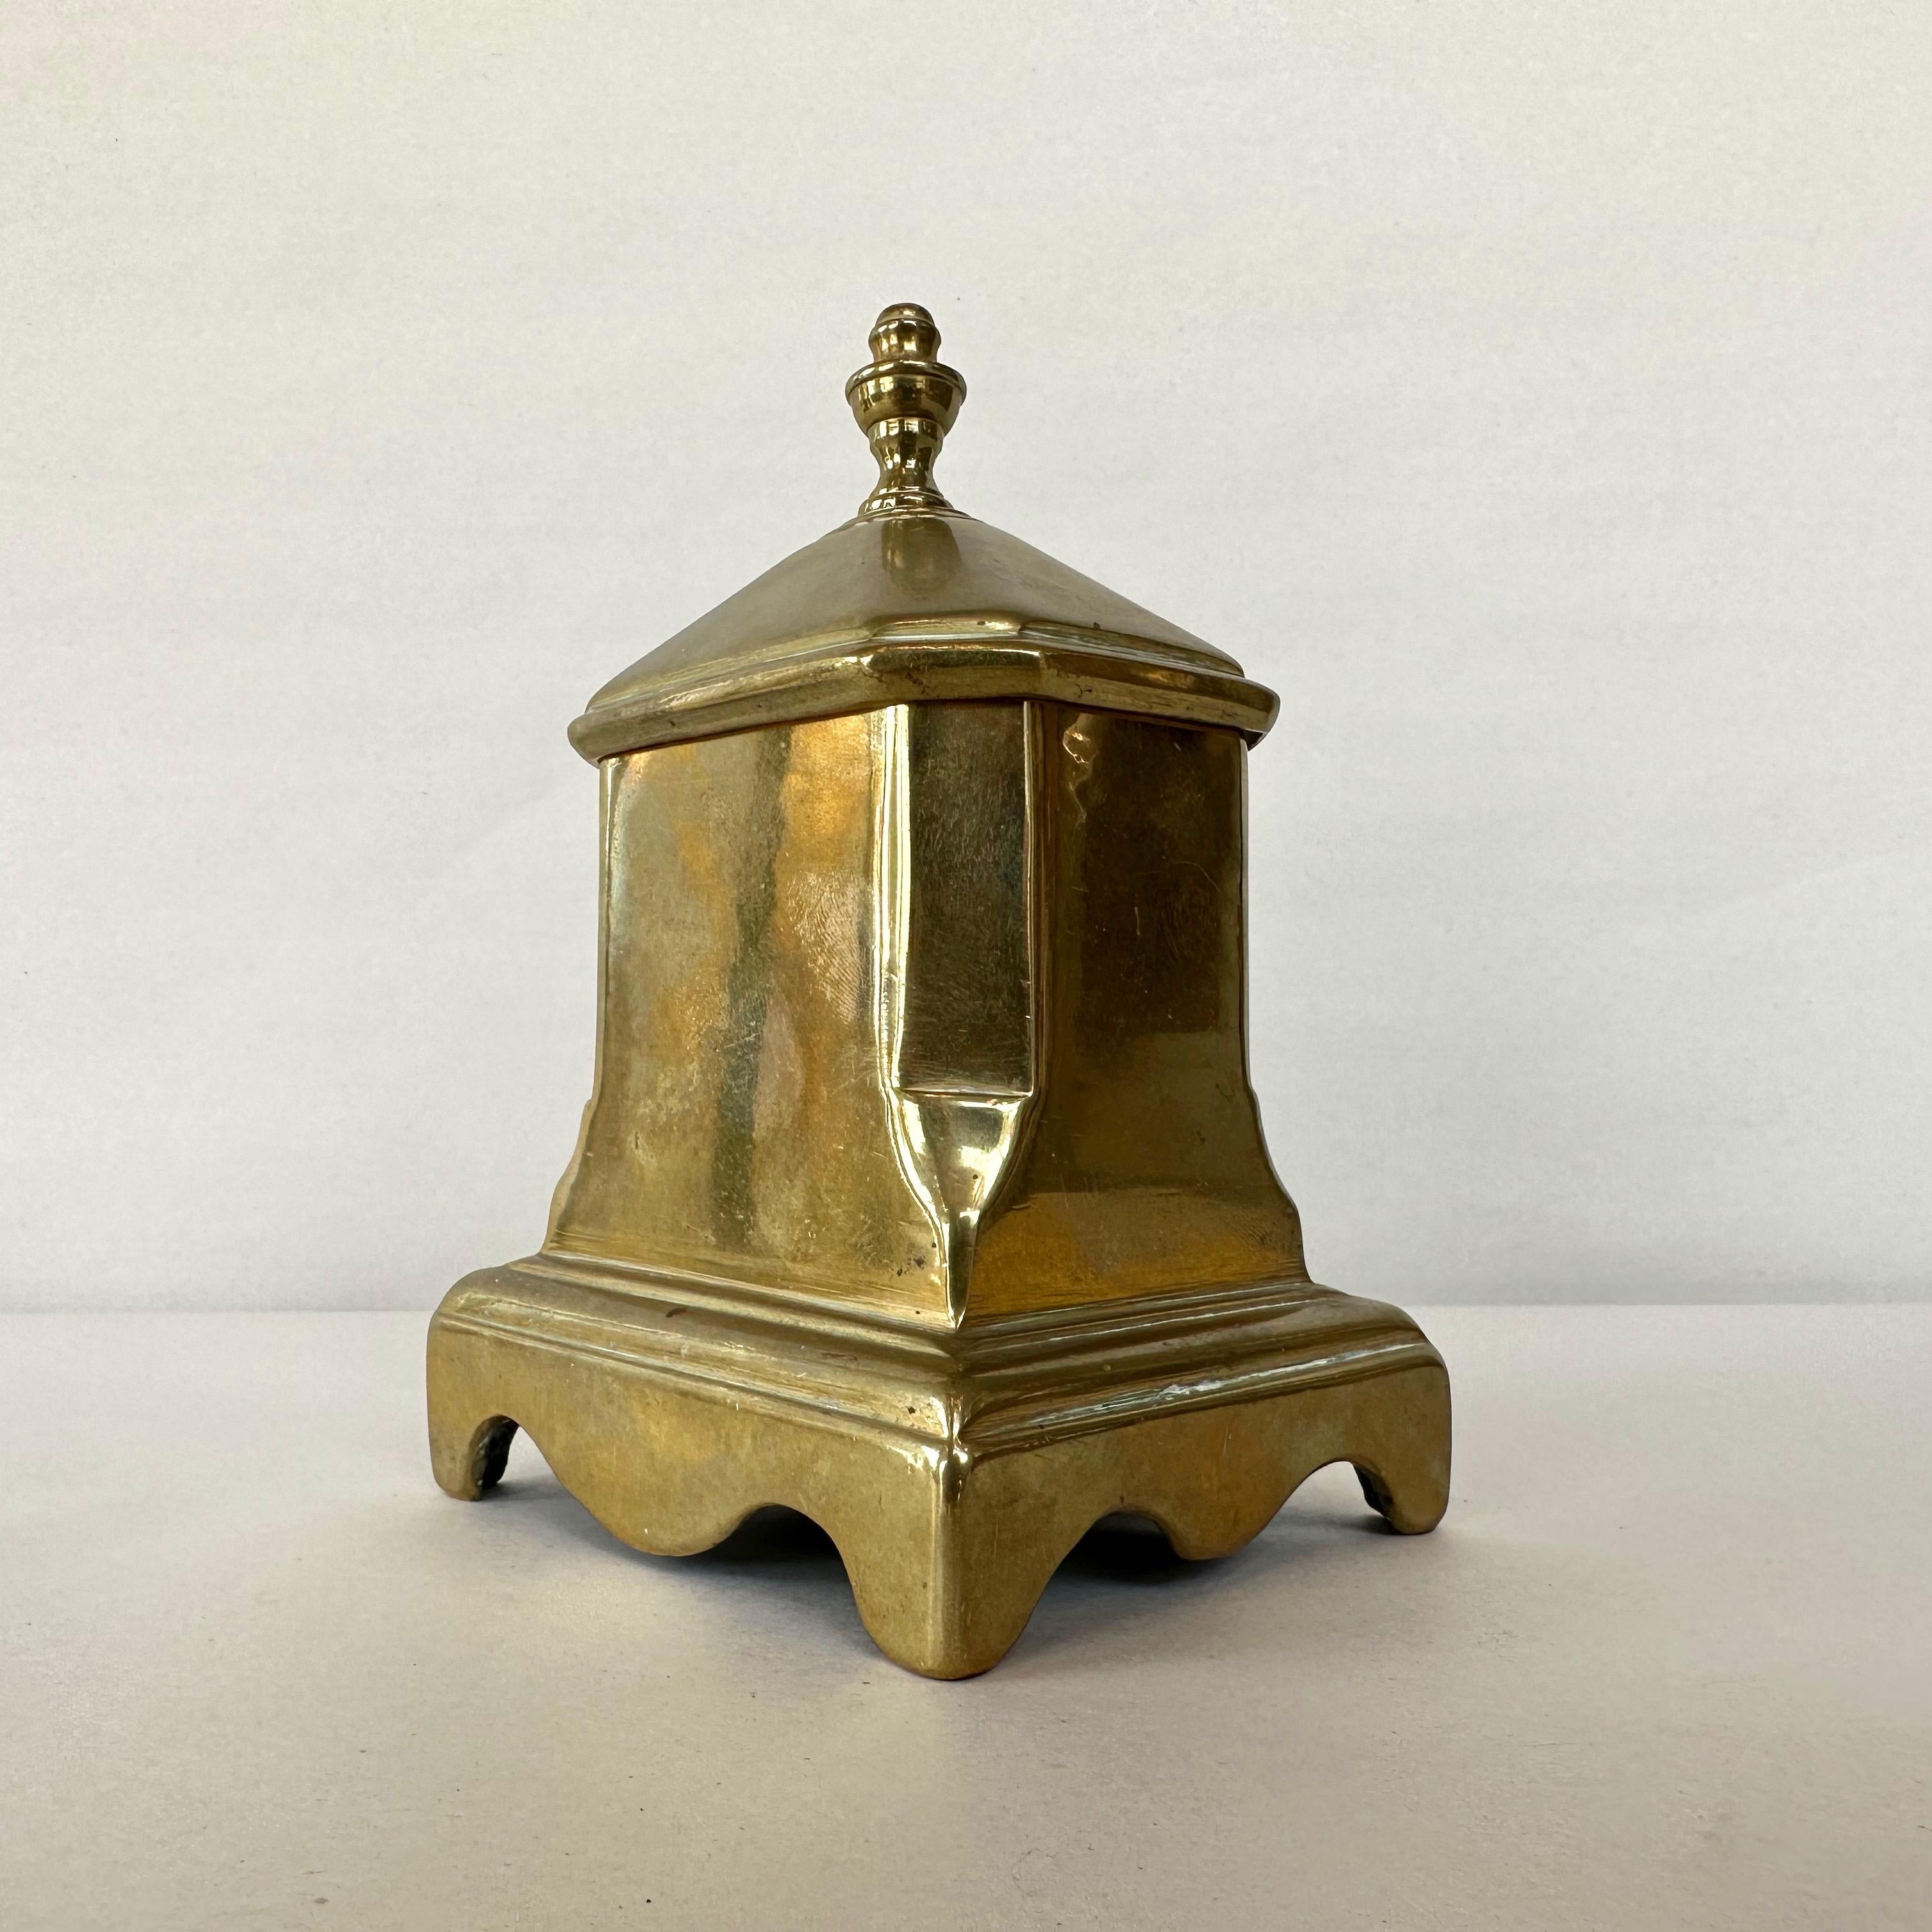 Antique American Queen Anne Period Lidded Brass Tobacco Box, circa 1750 For Sale 3